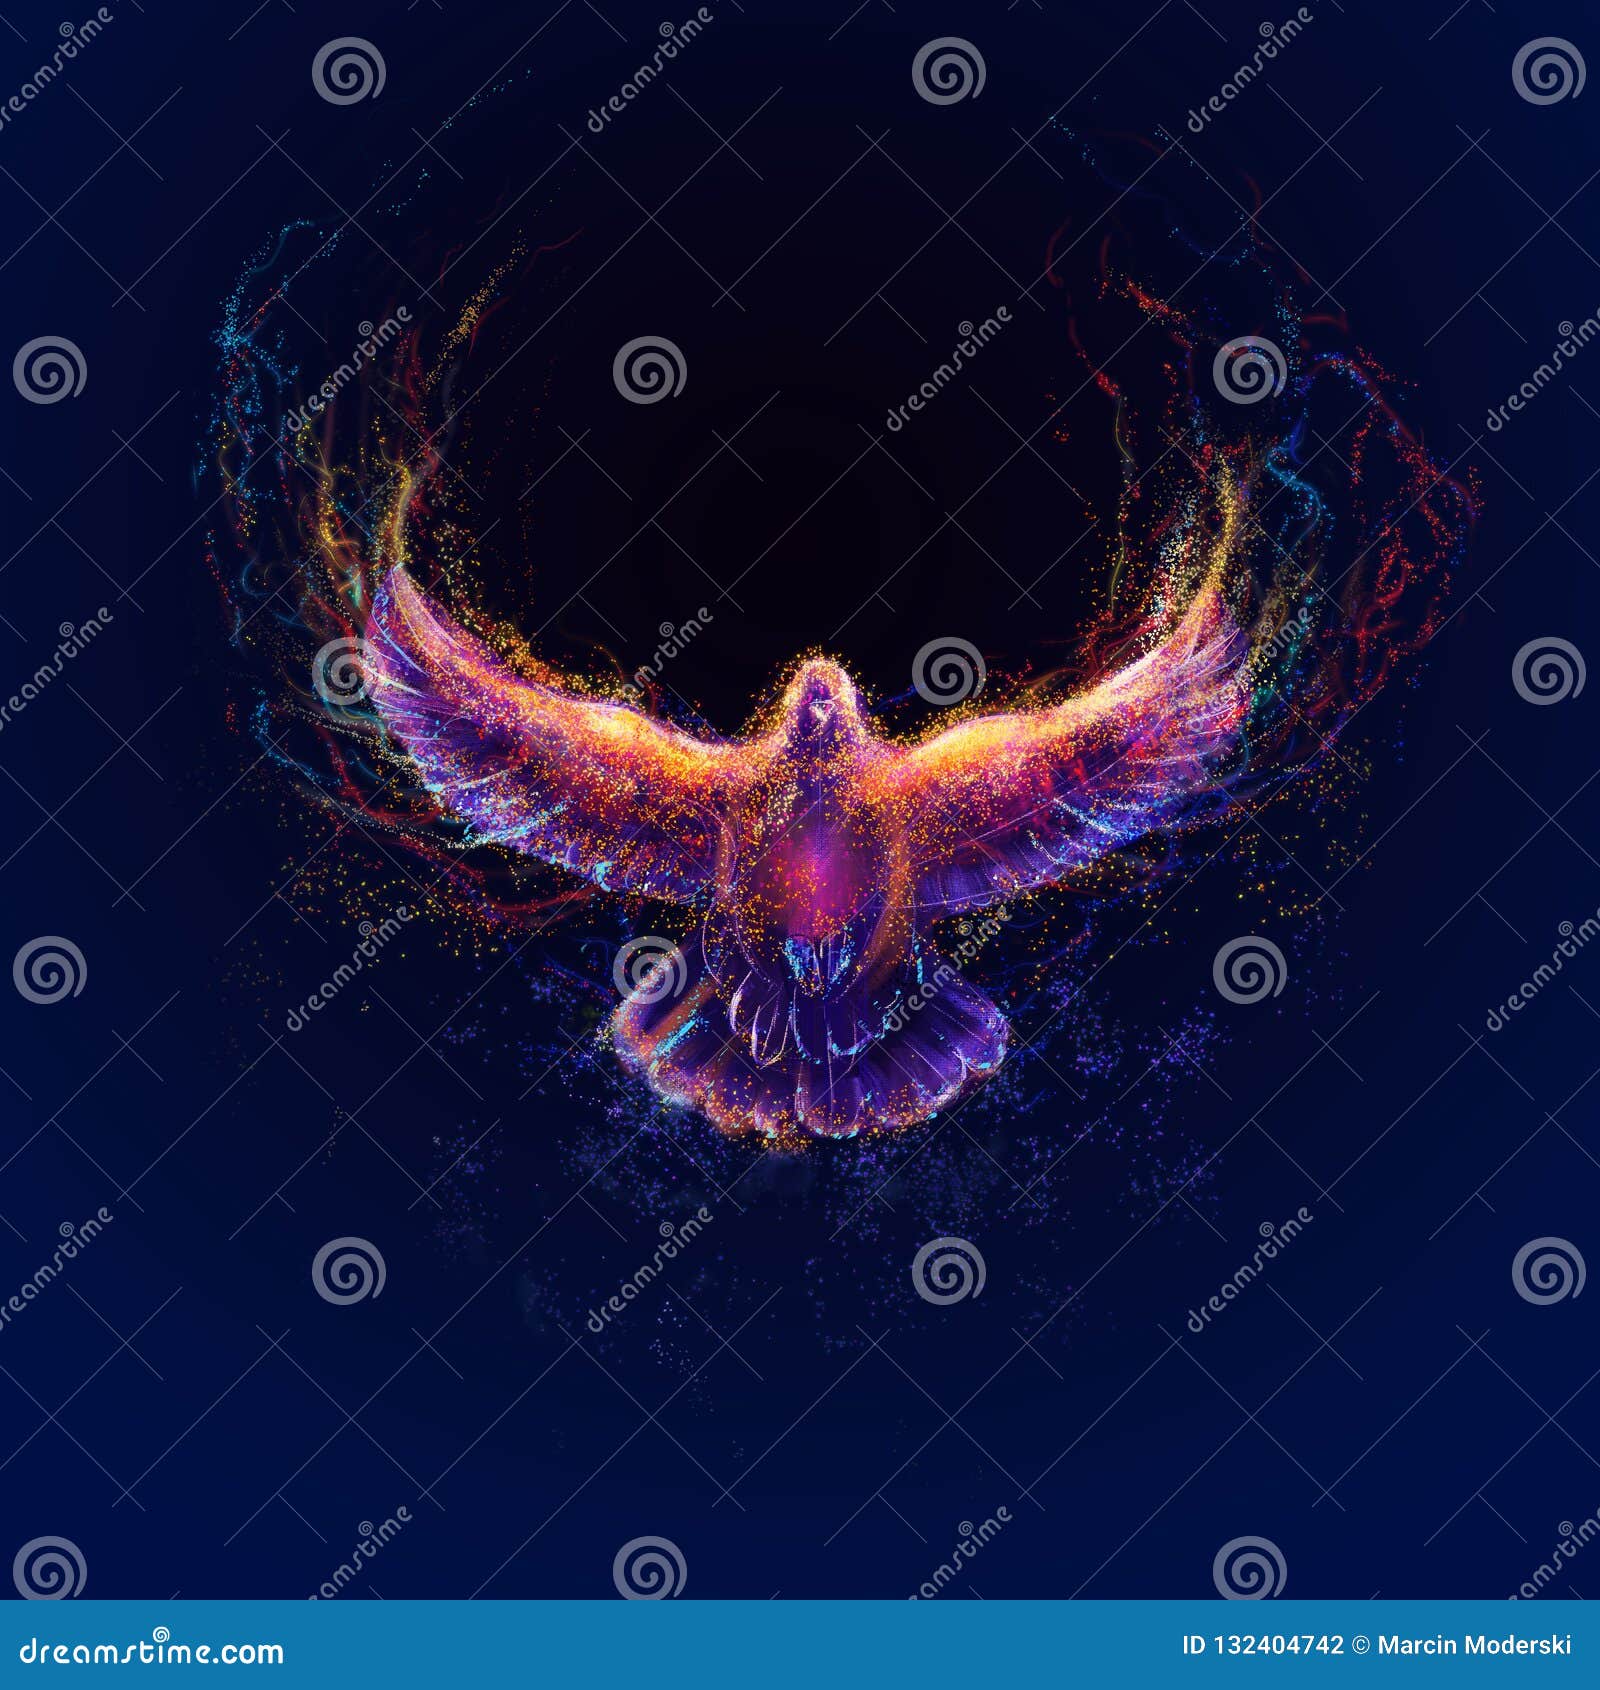 holy spirit digital paintings - 